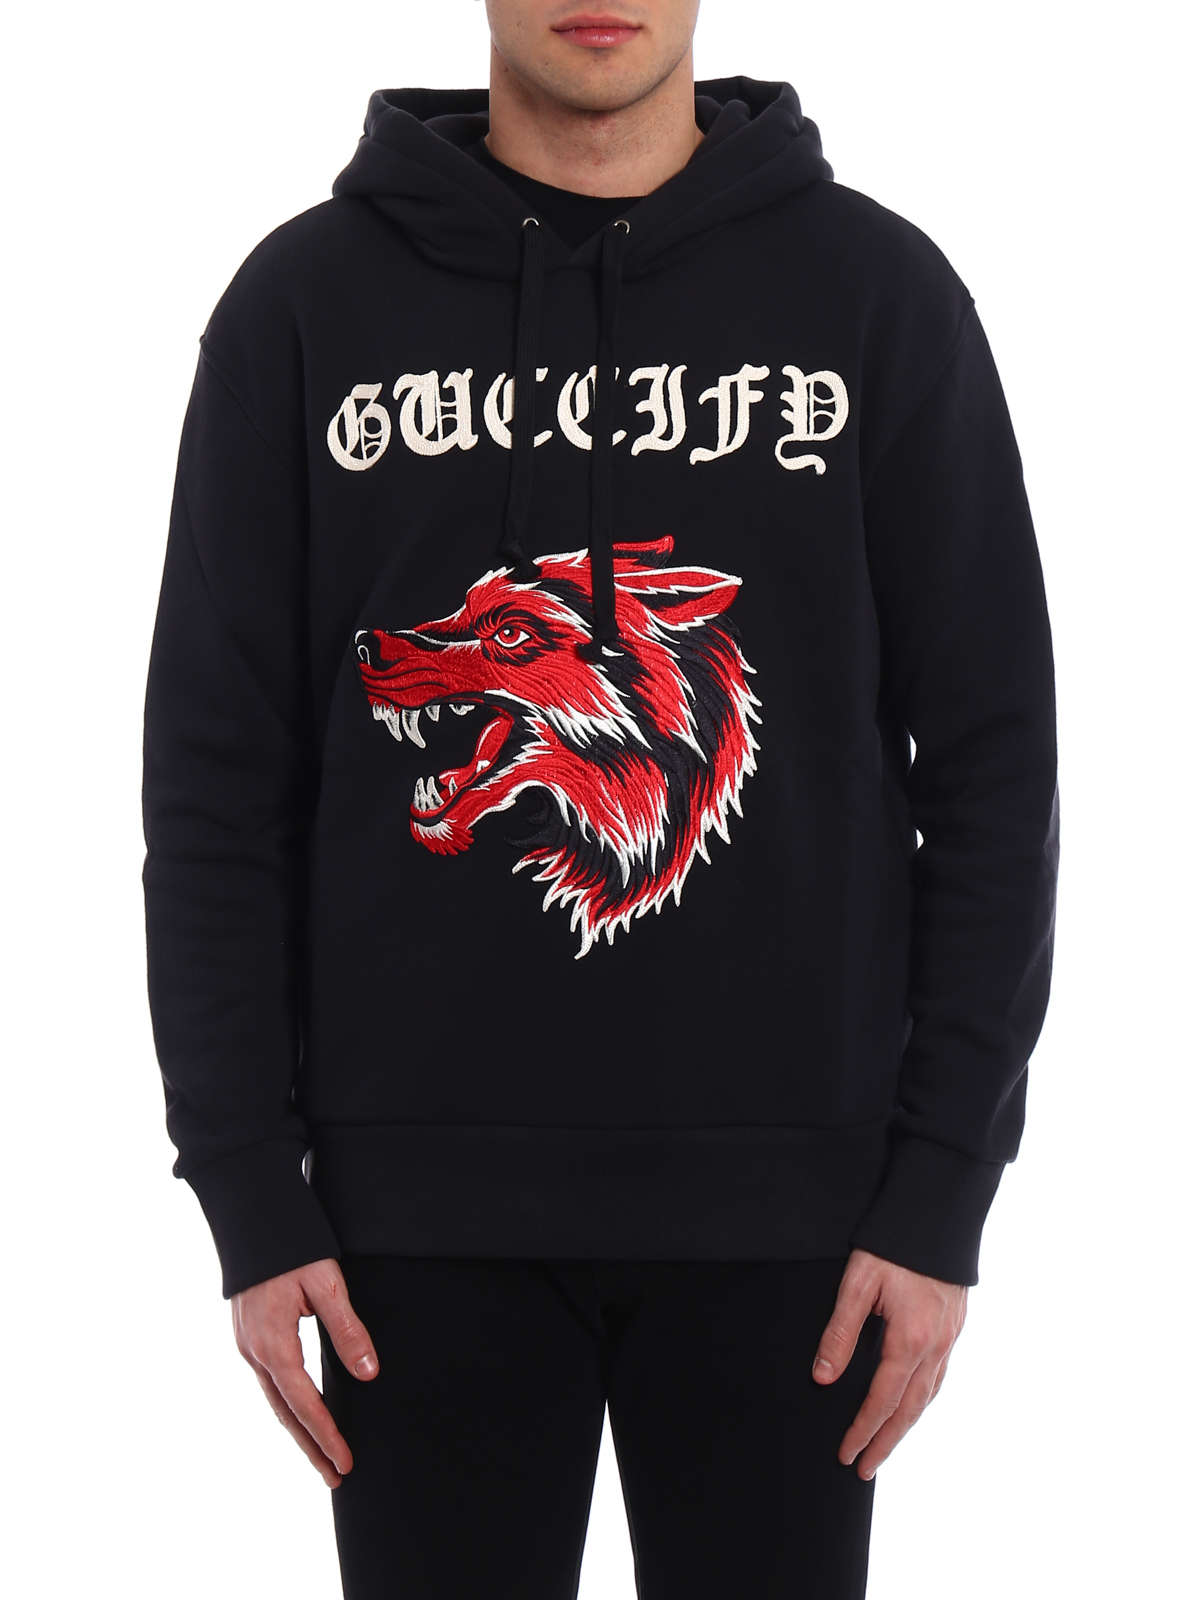 gucci wolf head sweater